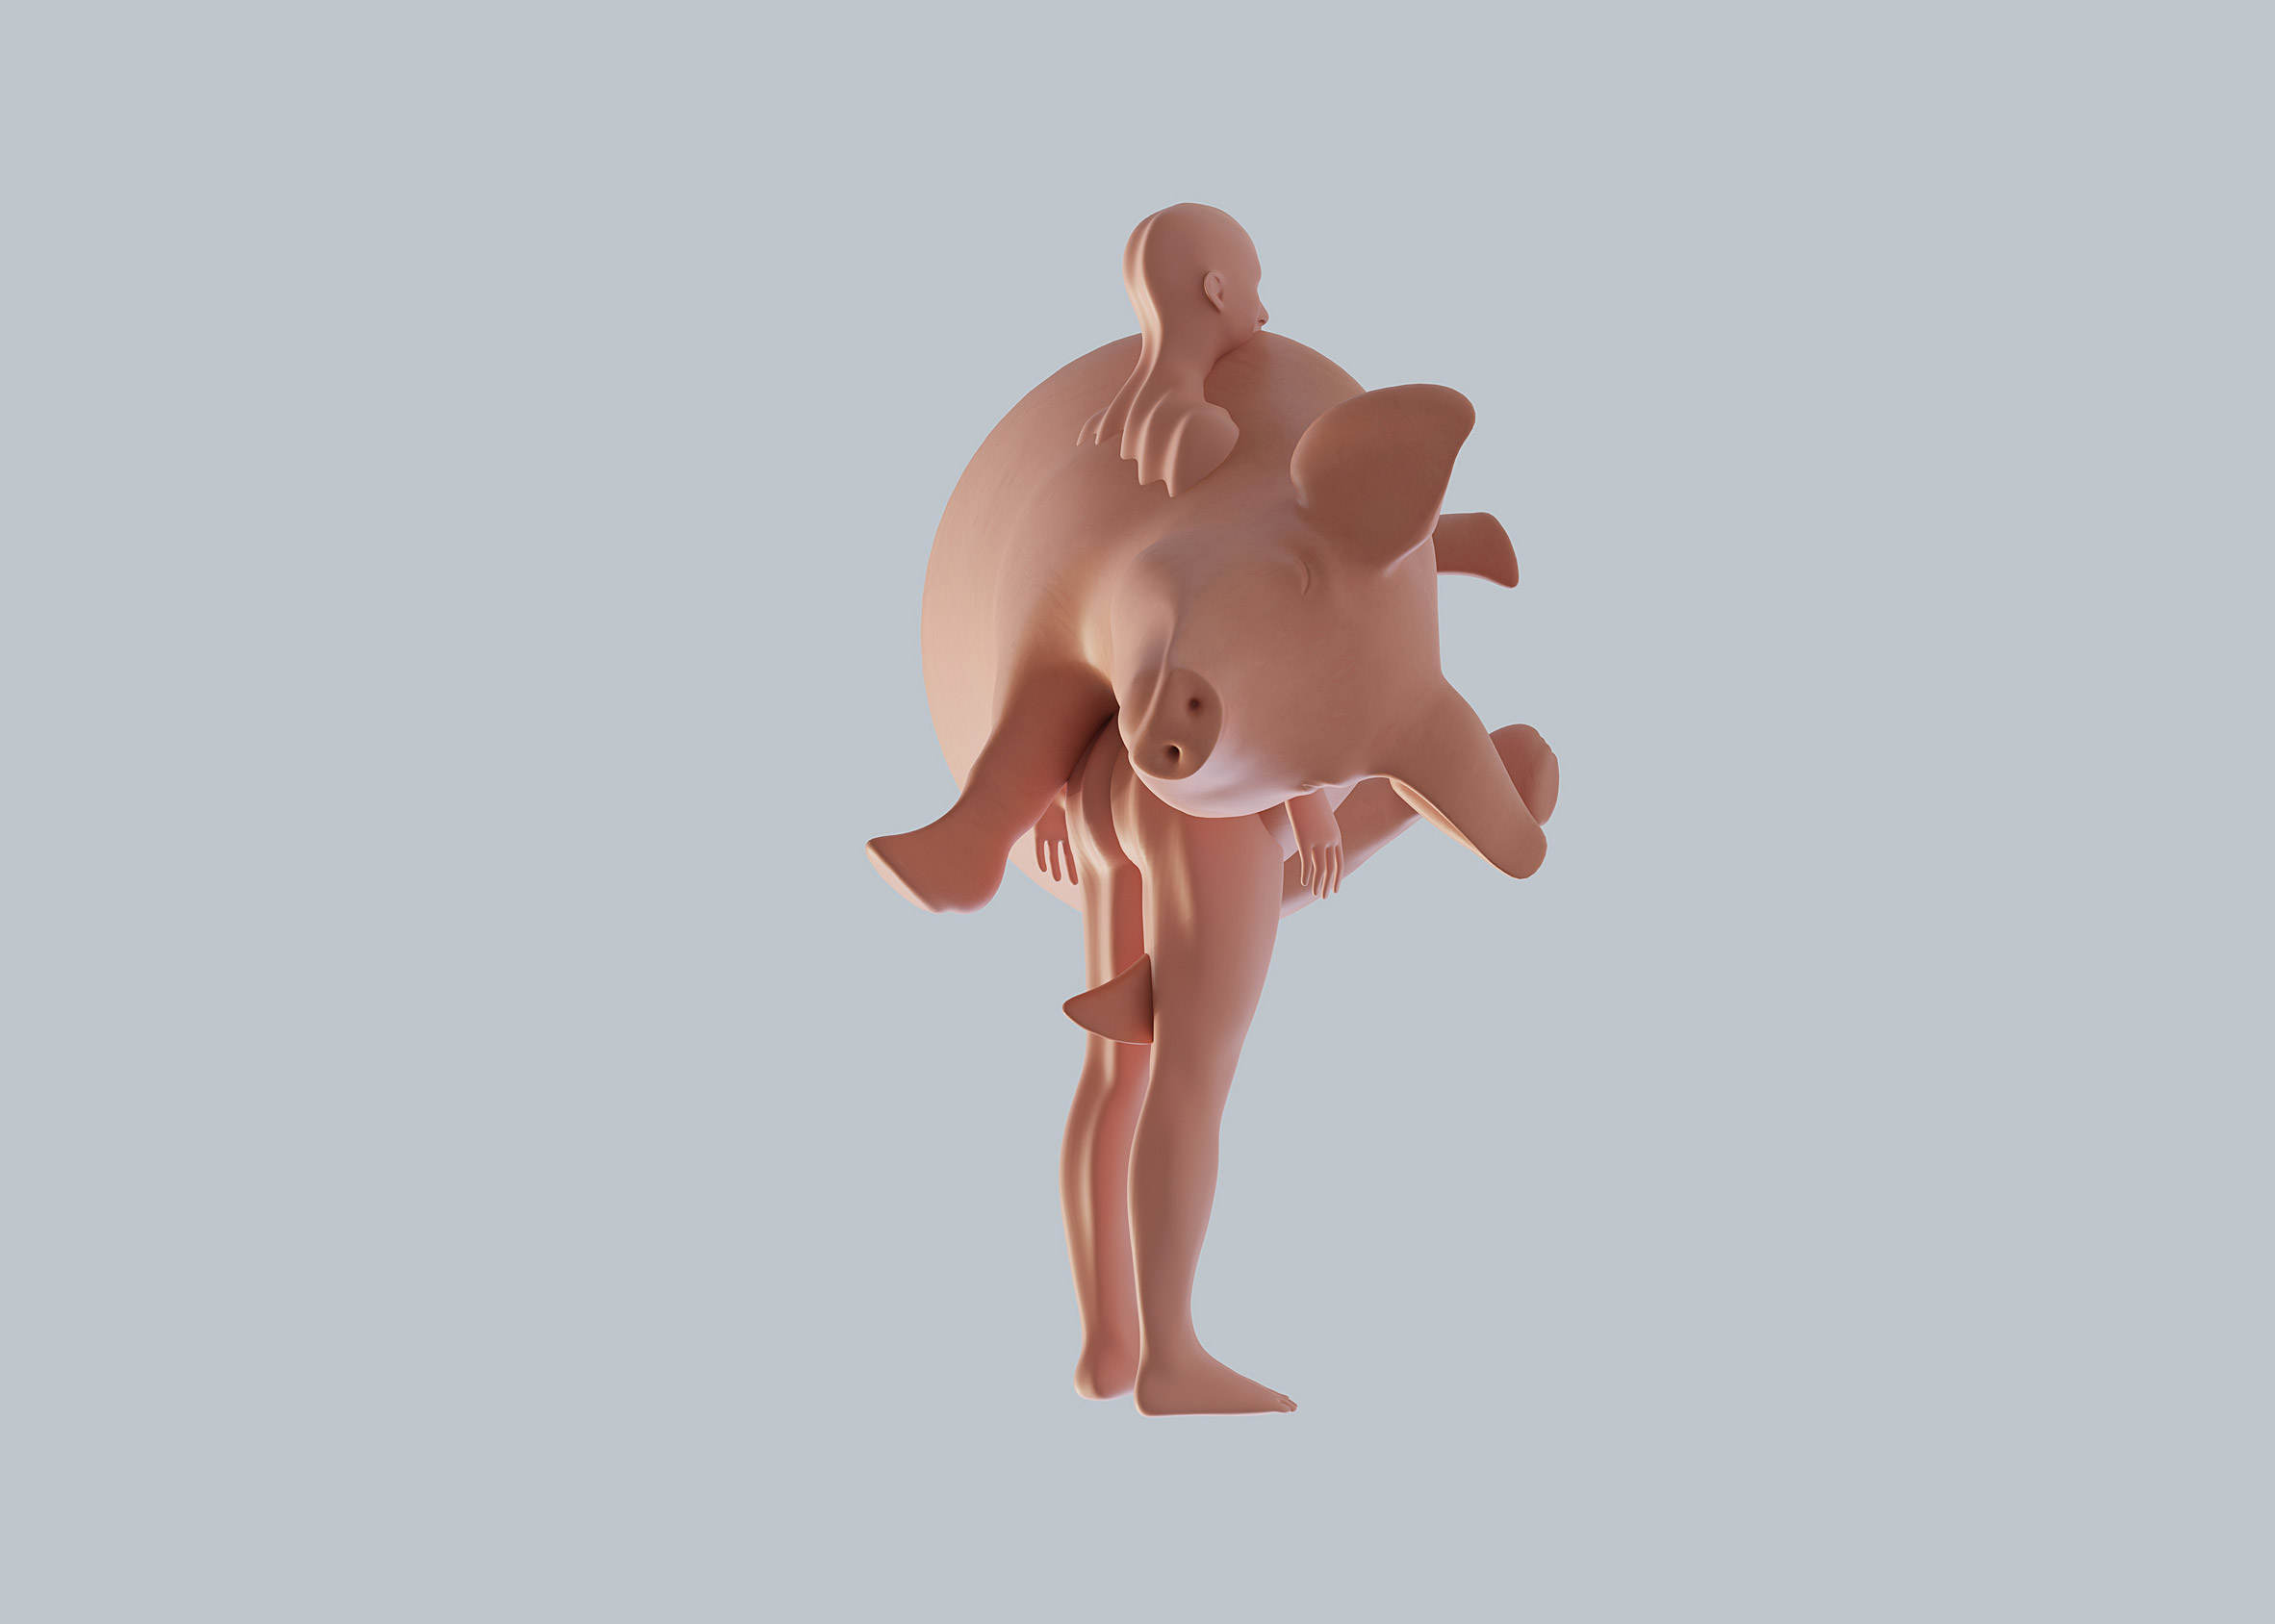 Visualisation showing pig-human hybrid